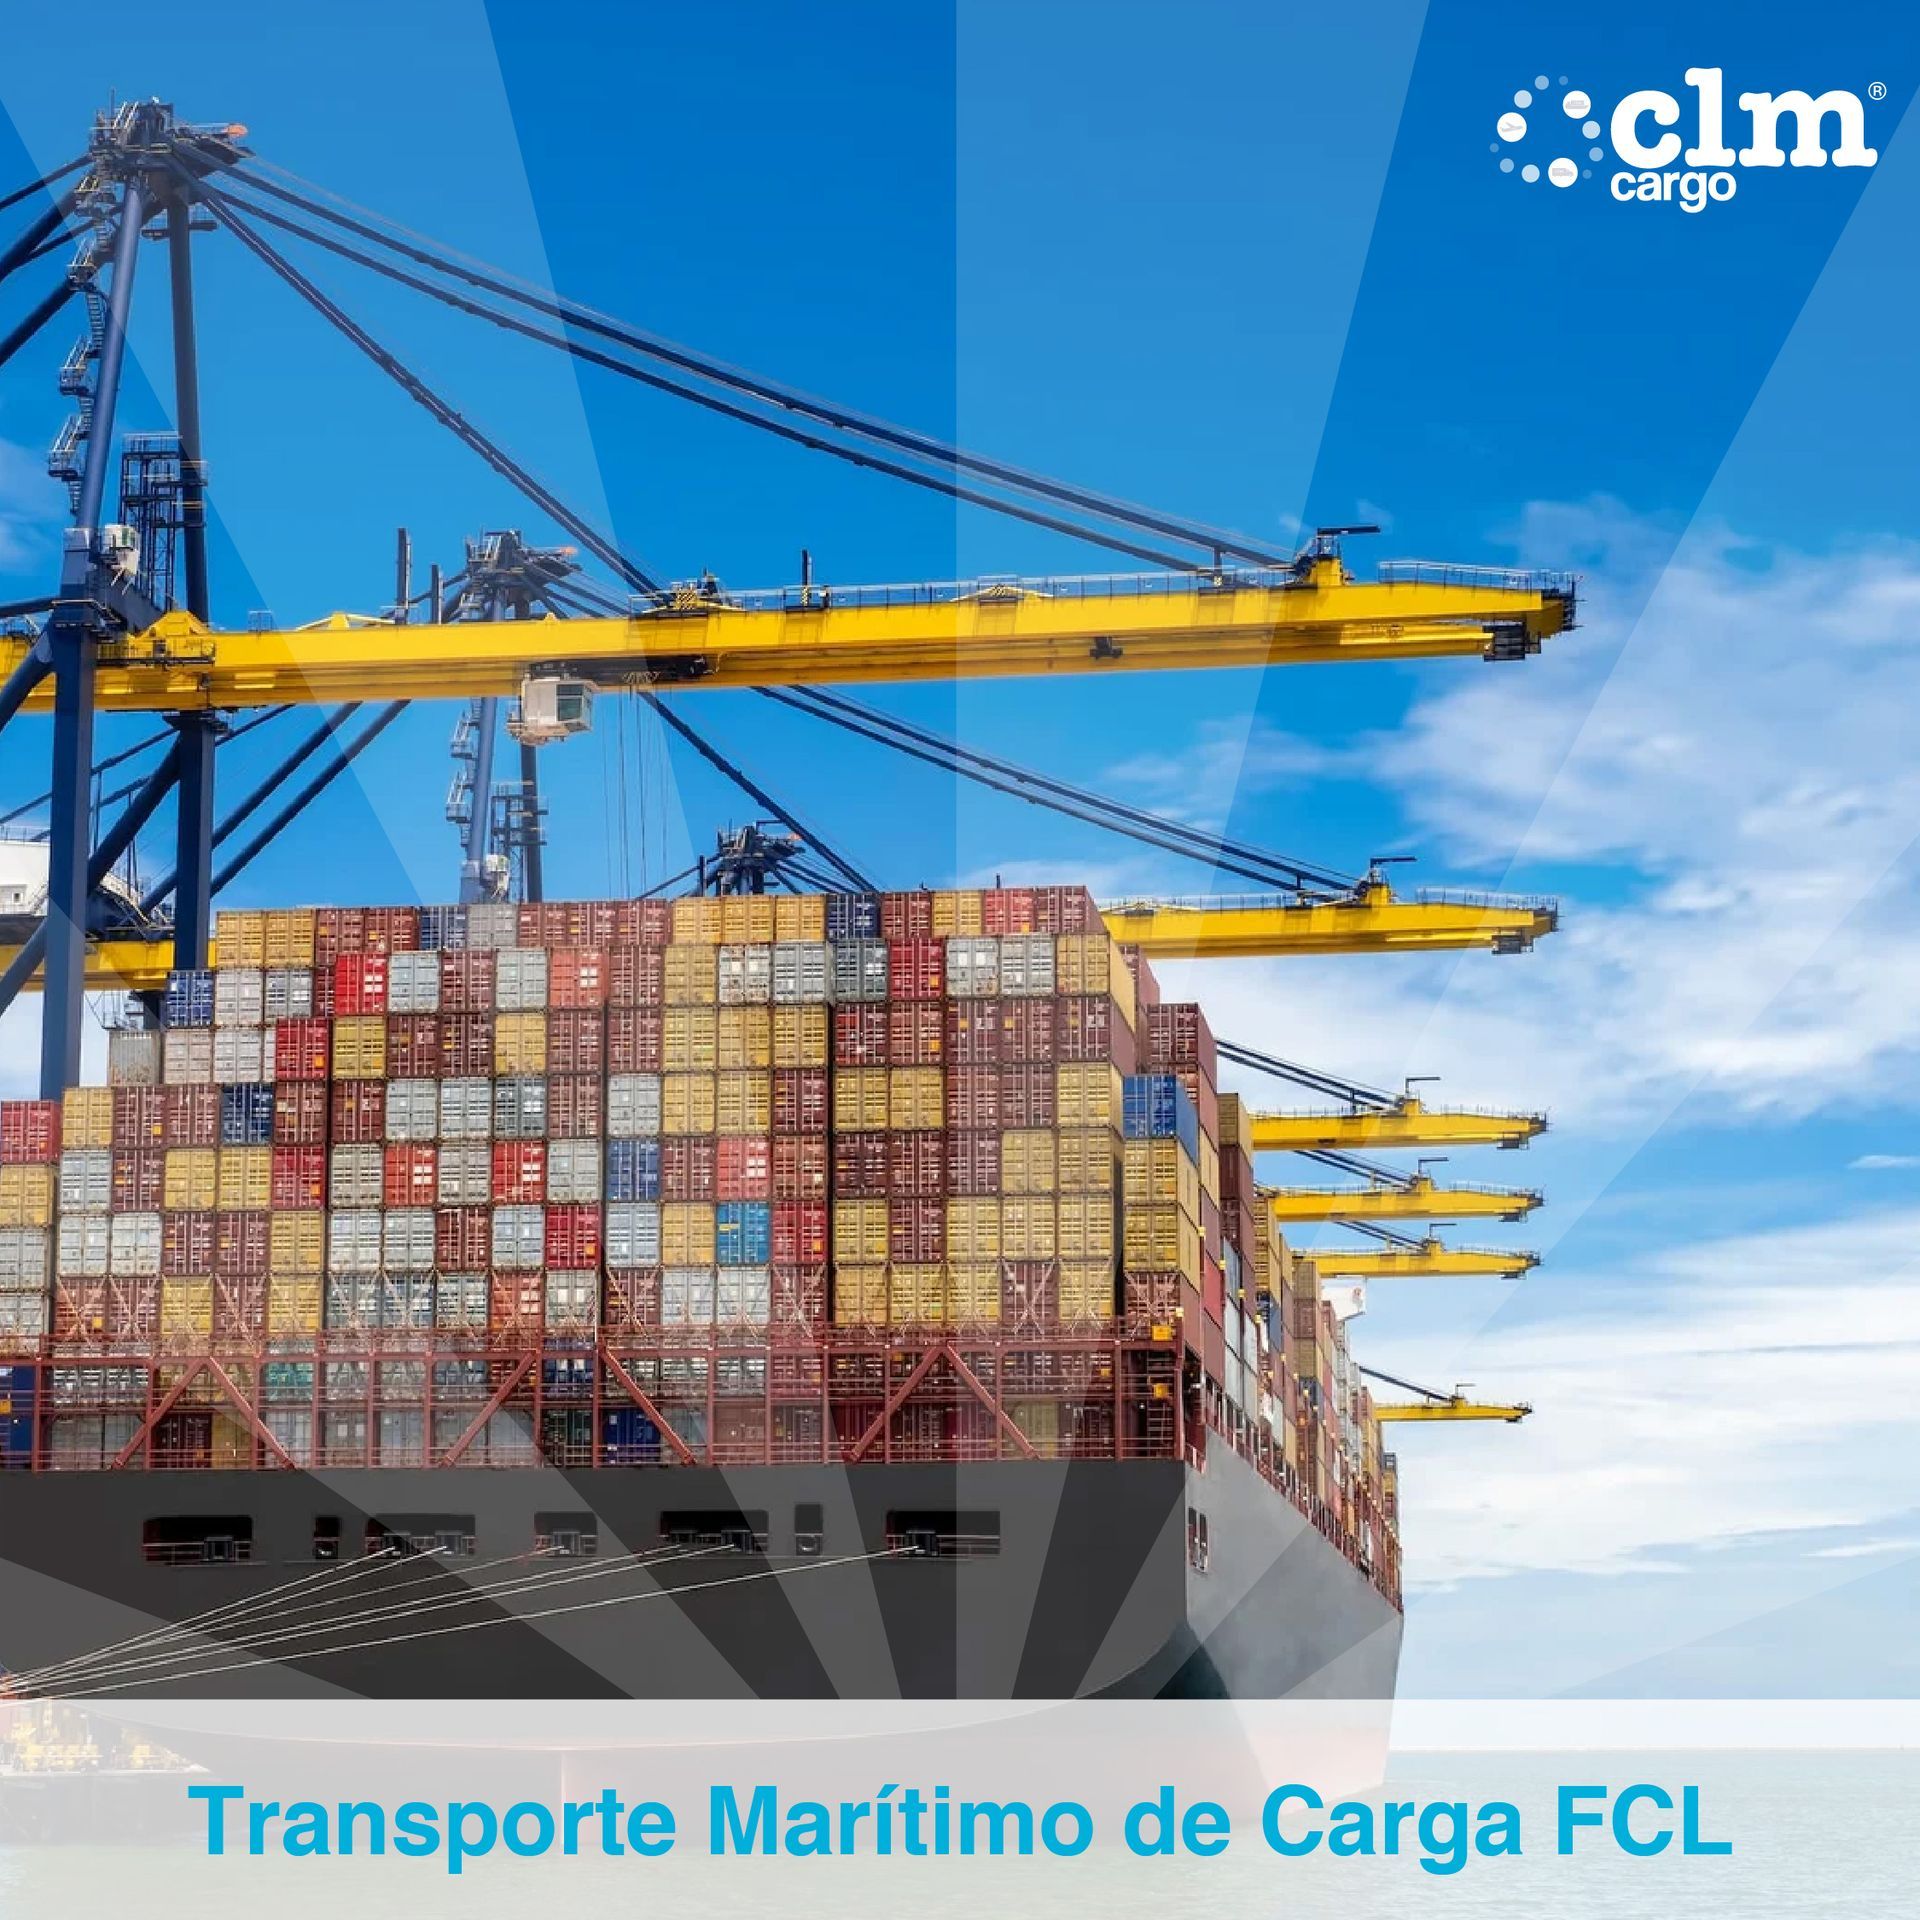 CLM Cargo Transporte Marítimo de Carga FCL
